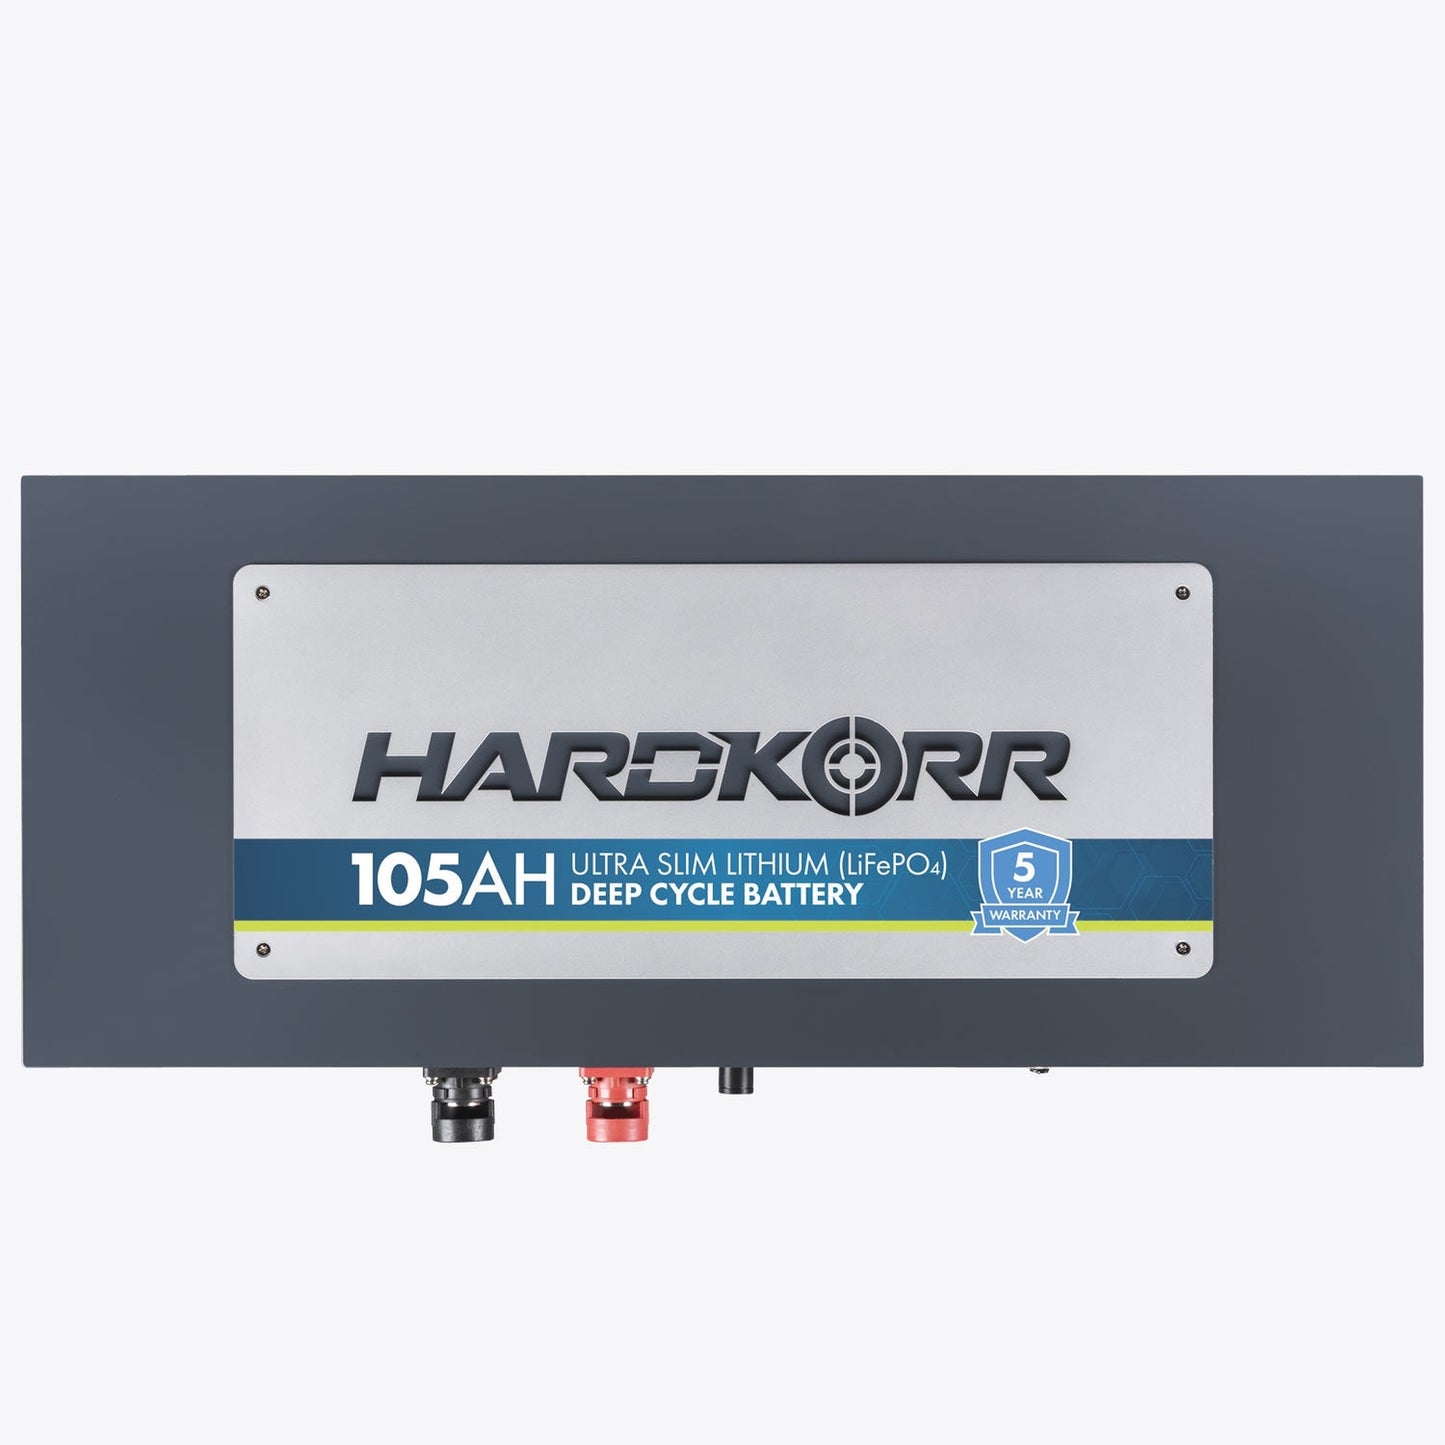 Hard Korr 105Ah Lithium (LiFePO4) Slimline Deep Cycle Battery W/ Bluetooth